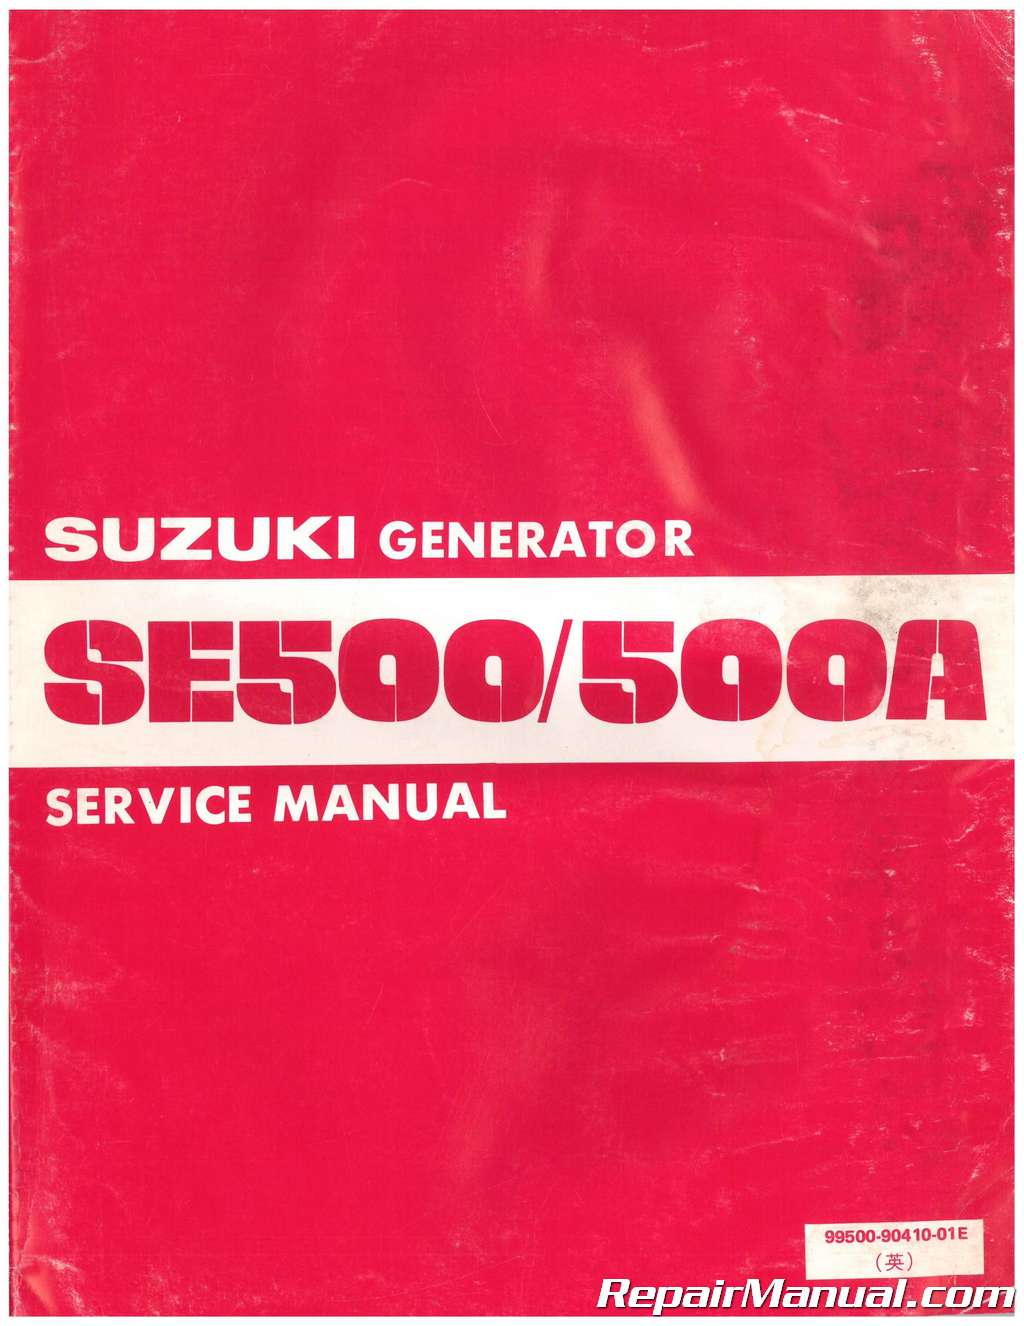 Suzuki SE500 SE500A Generator Service Manual